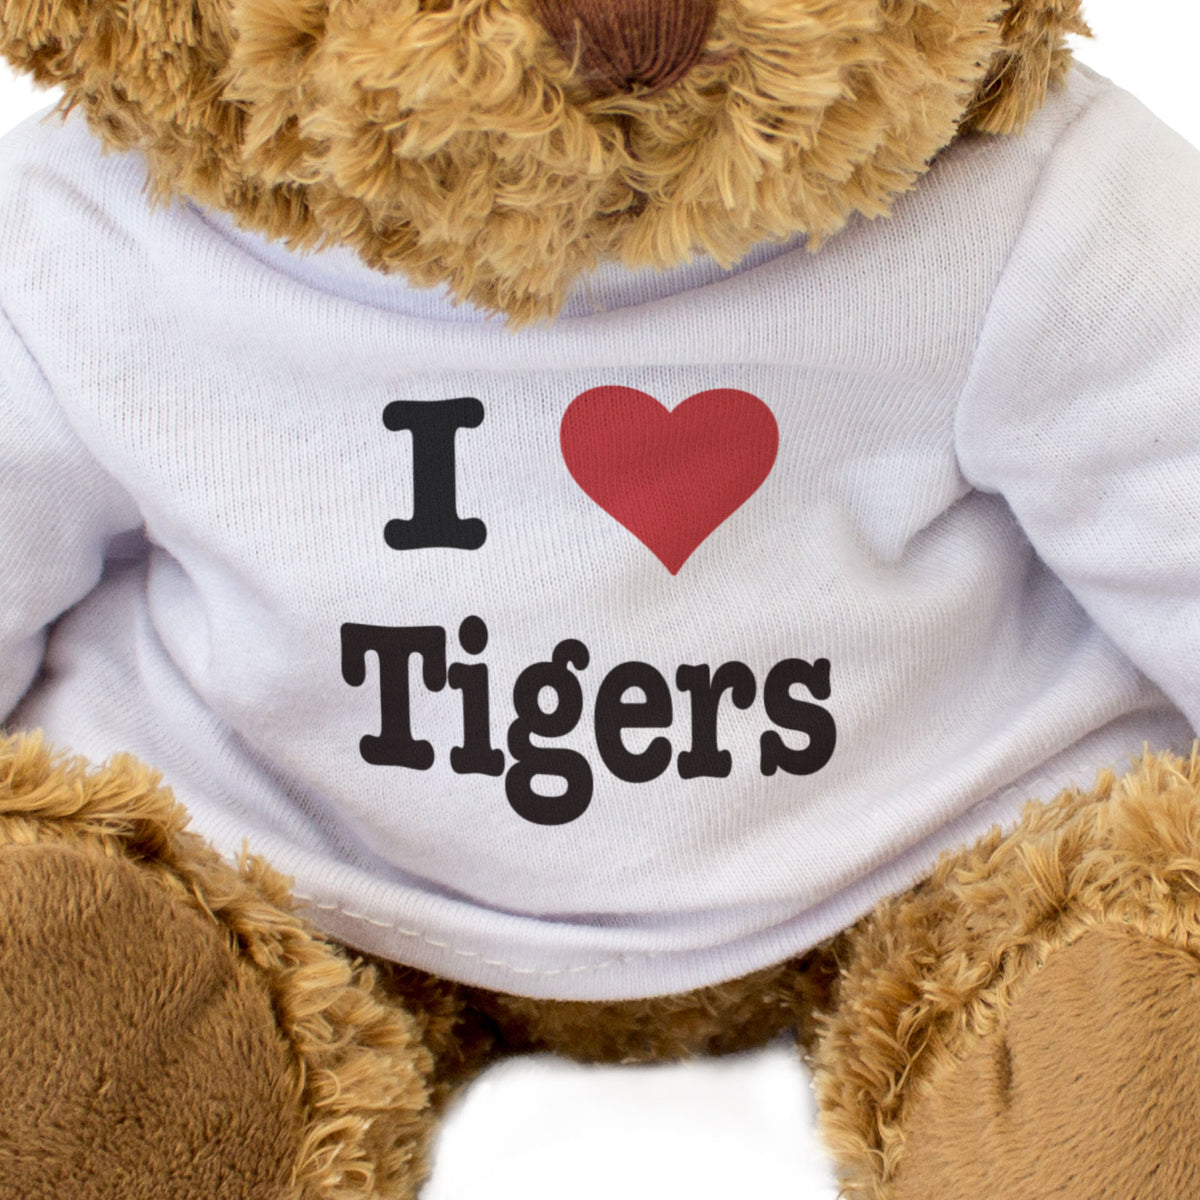 I Love Tigers - Teddy Bear